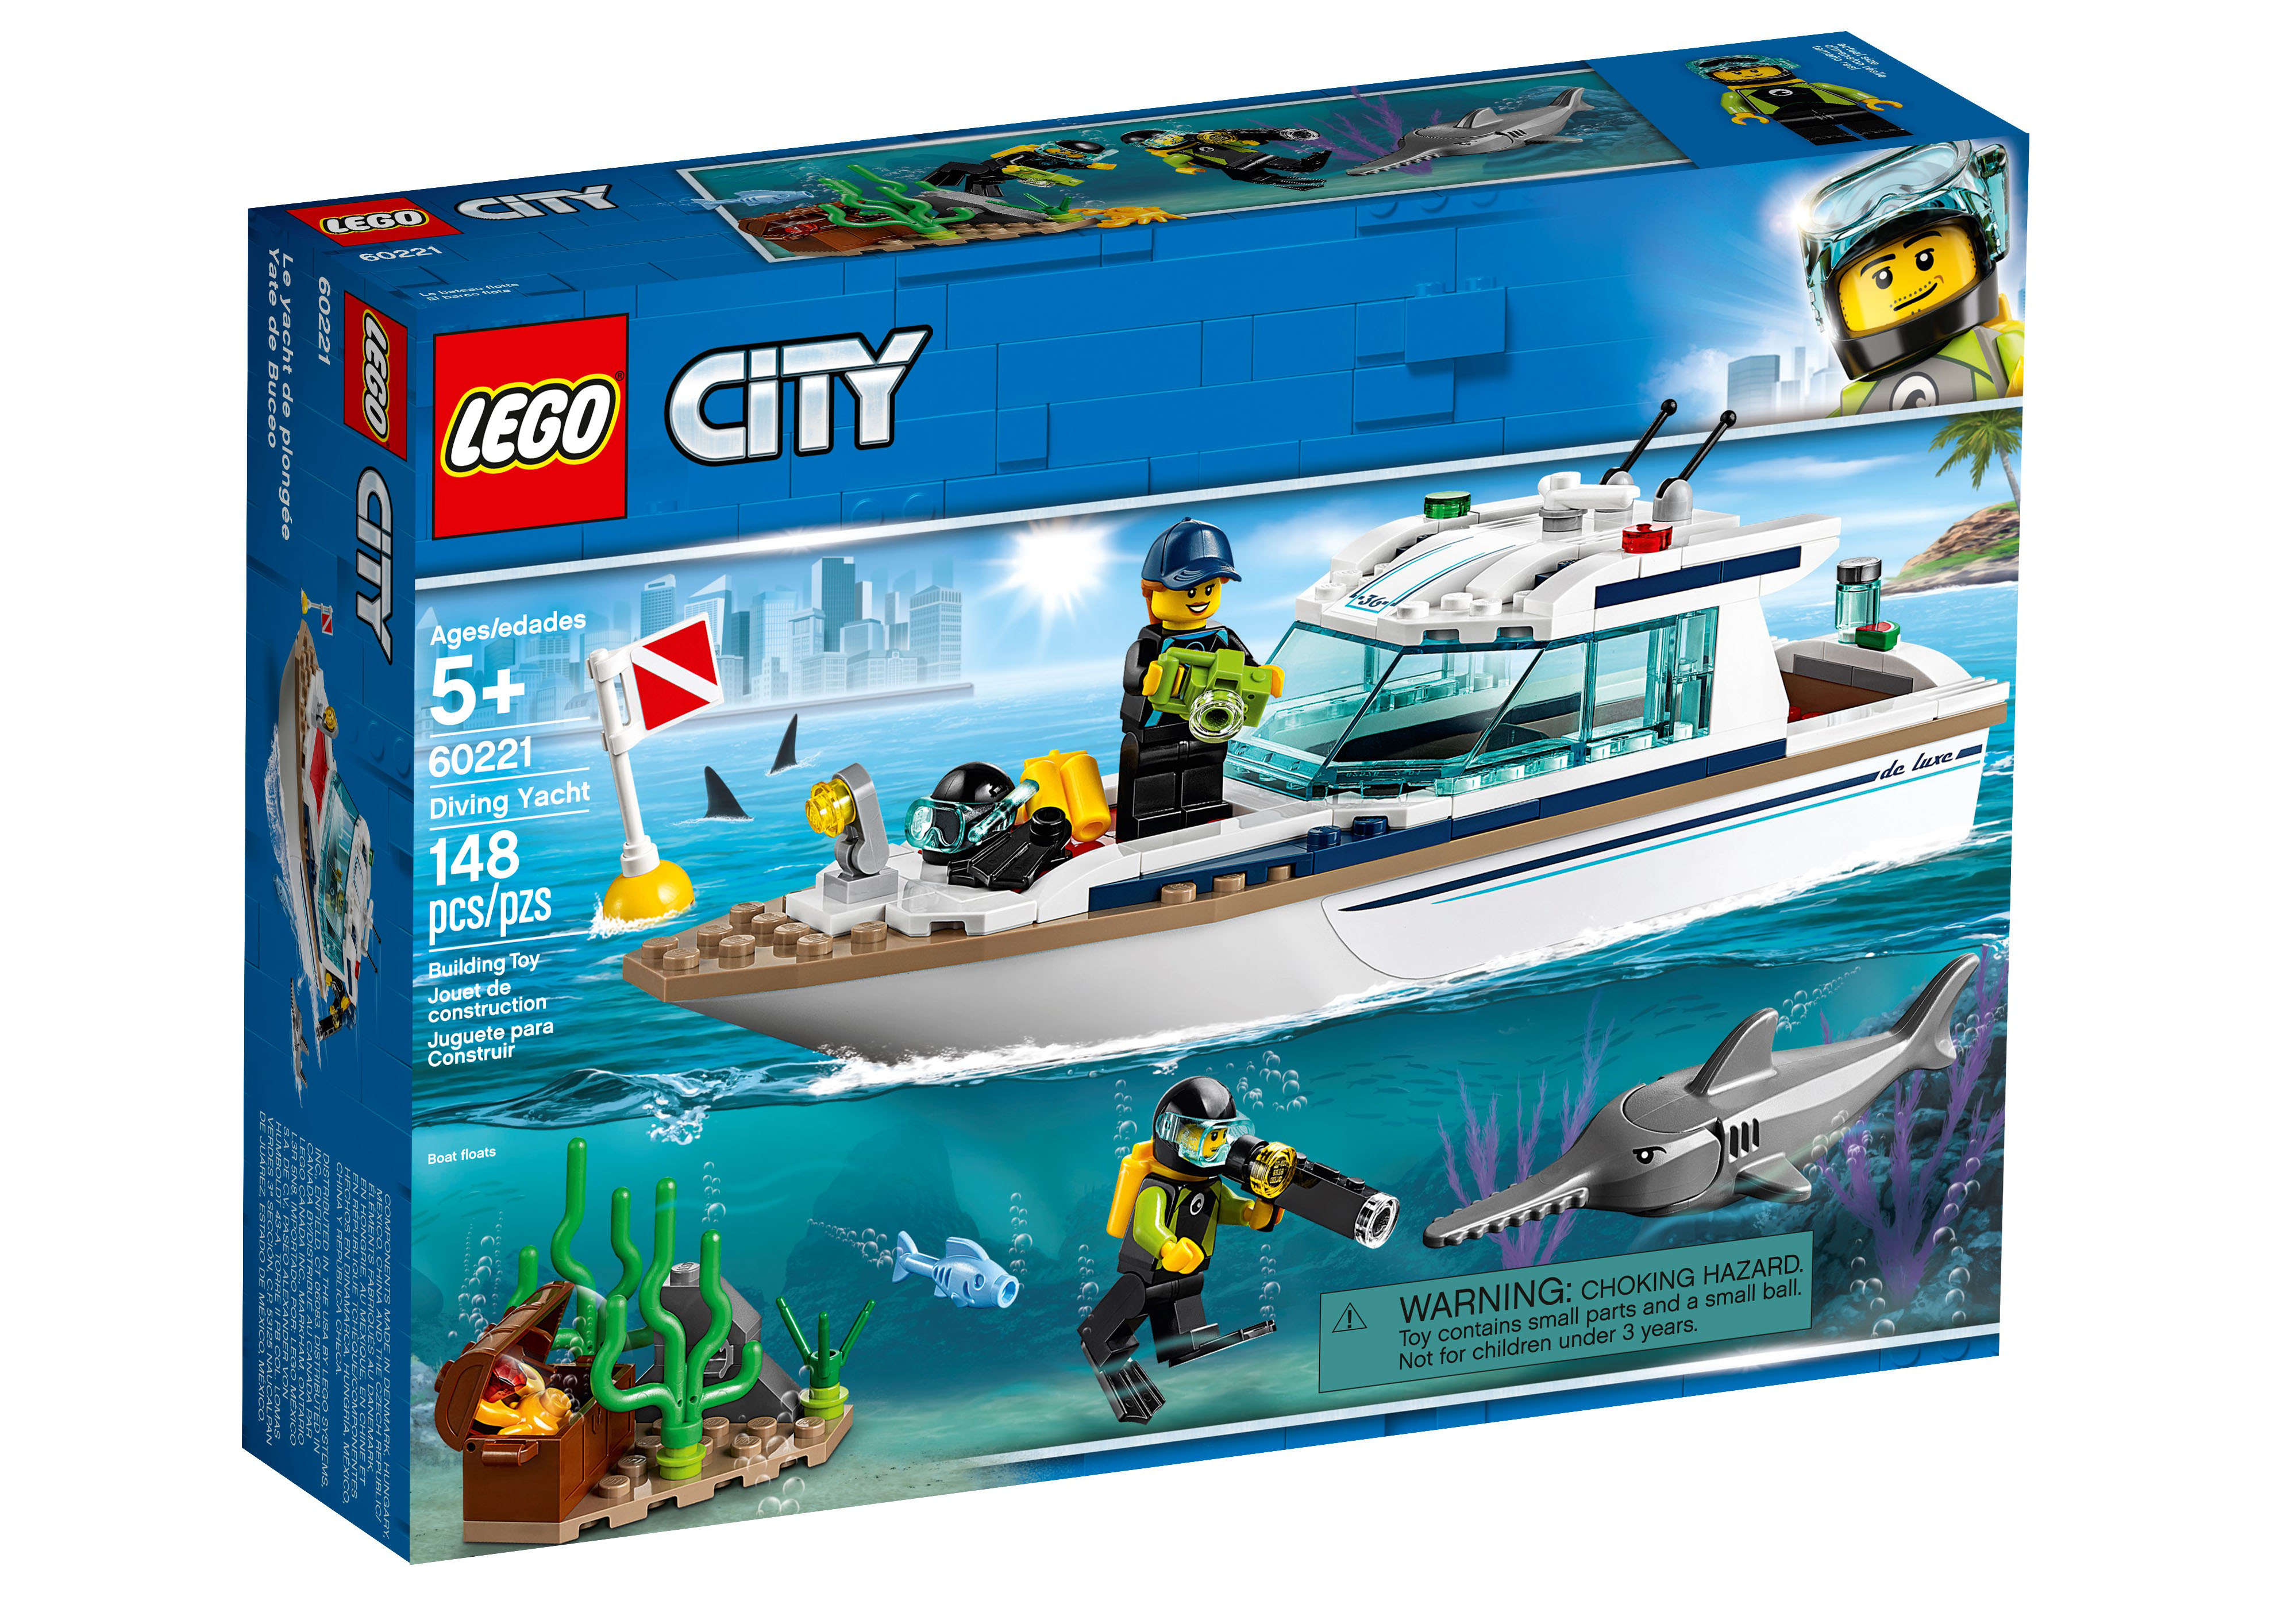 LEGO City Diving Yacht Set 60221